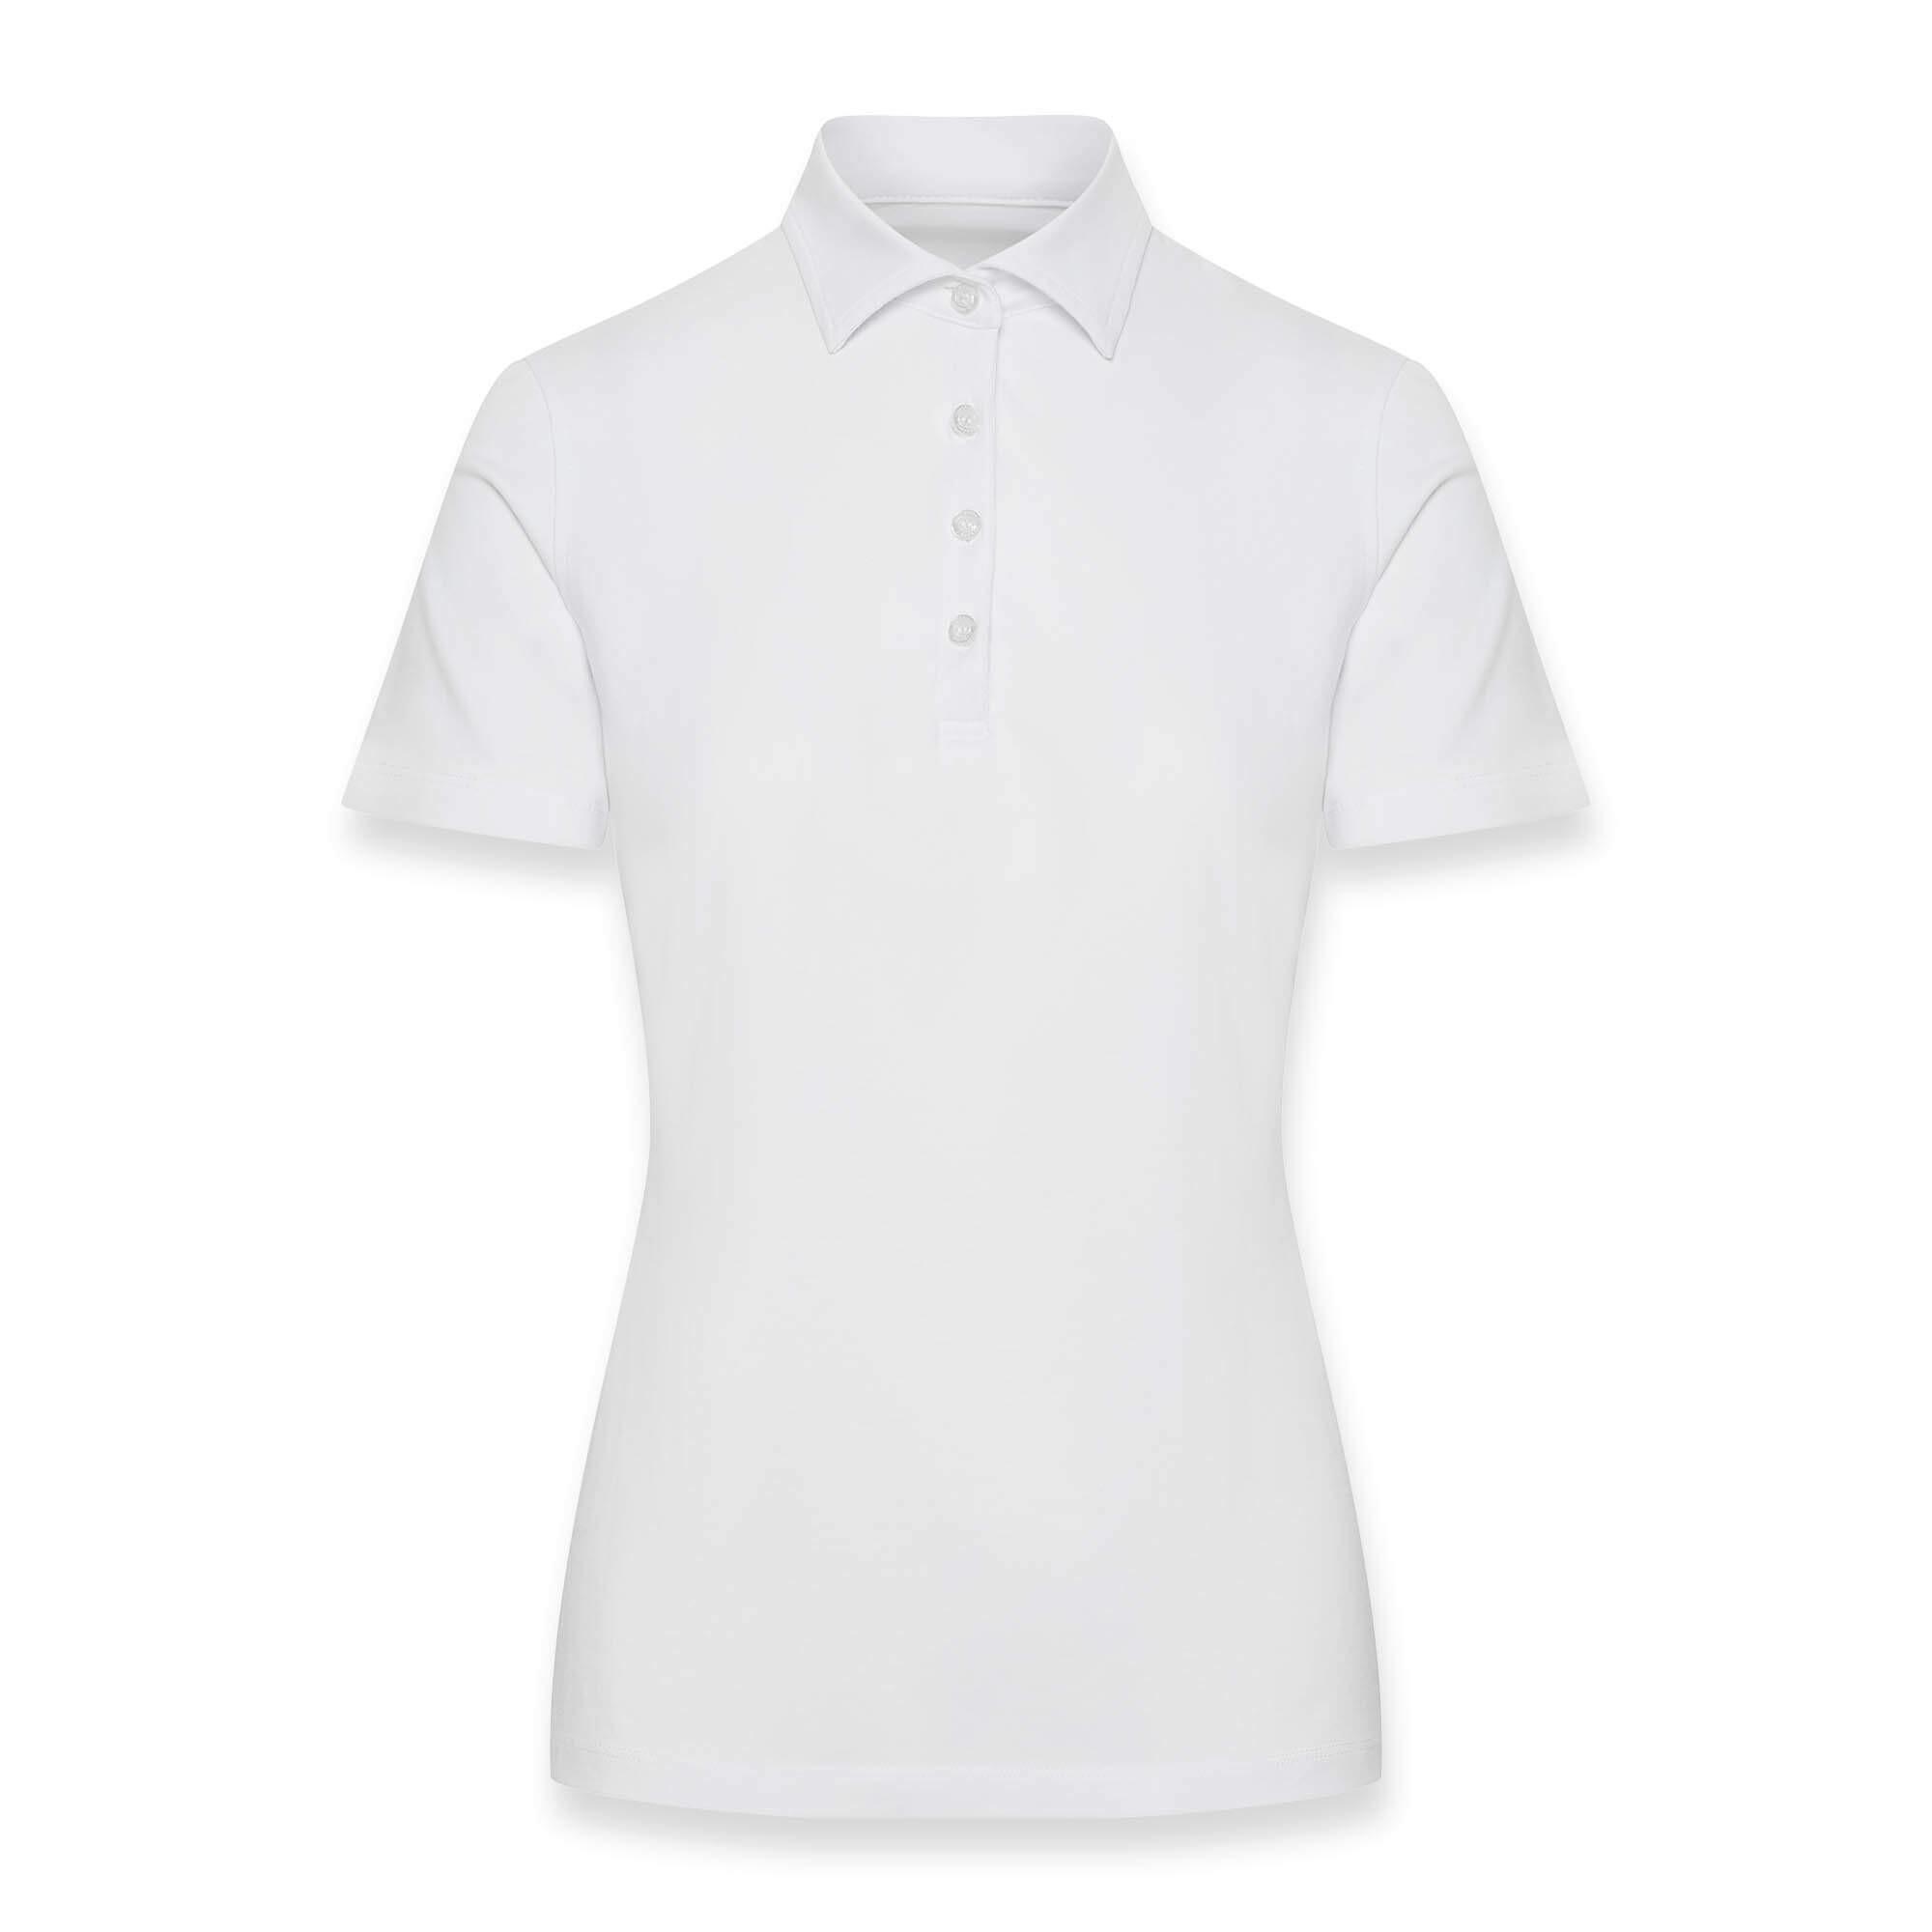 Biała koszulka Polo damska